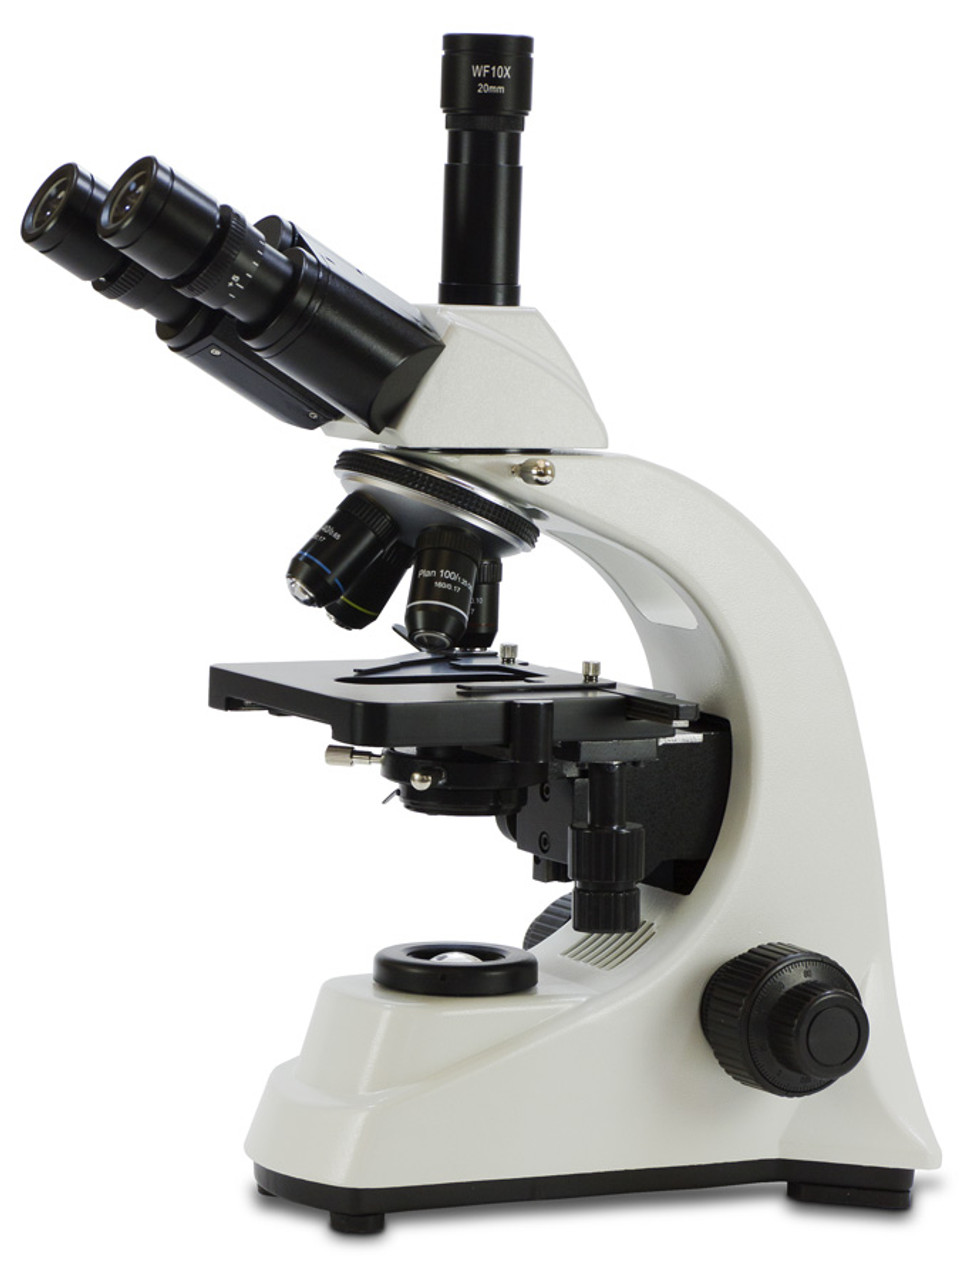 microscope gift guide - professional trinocular microscope